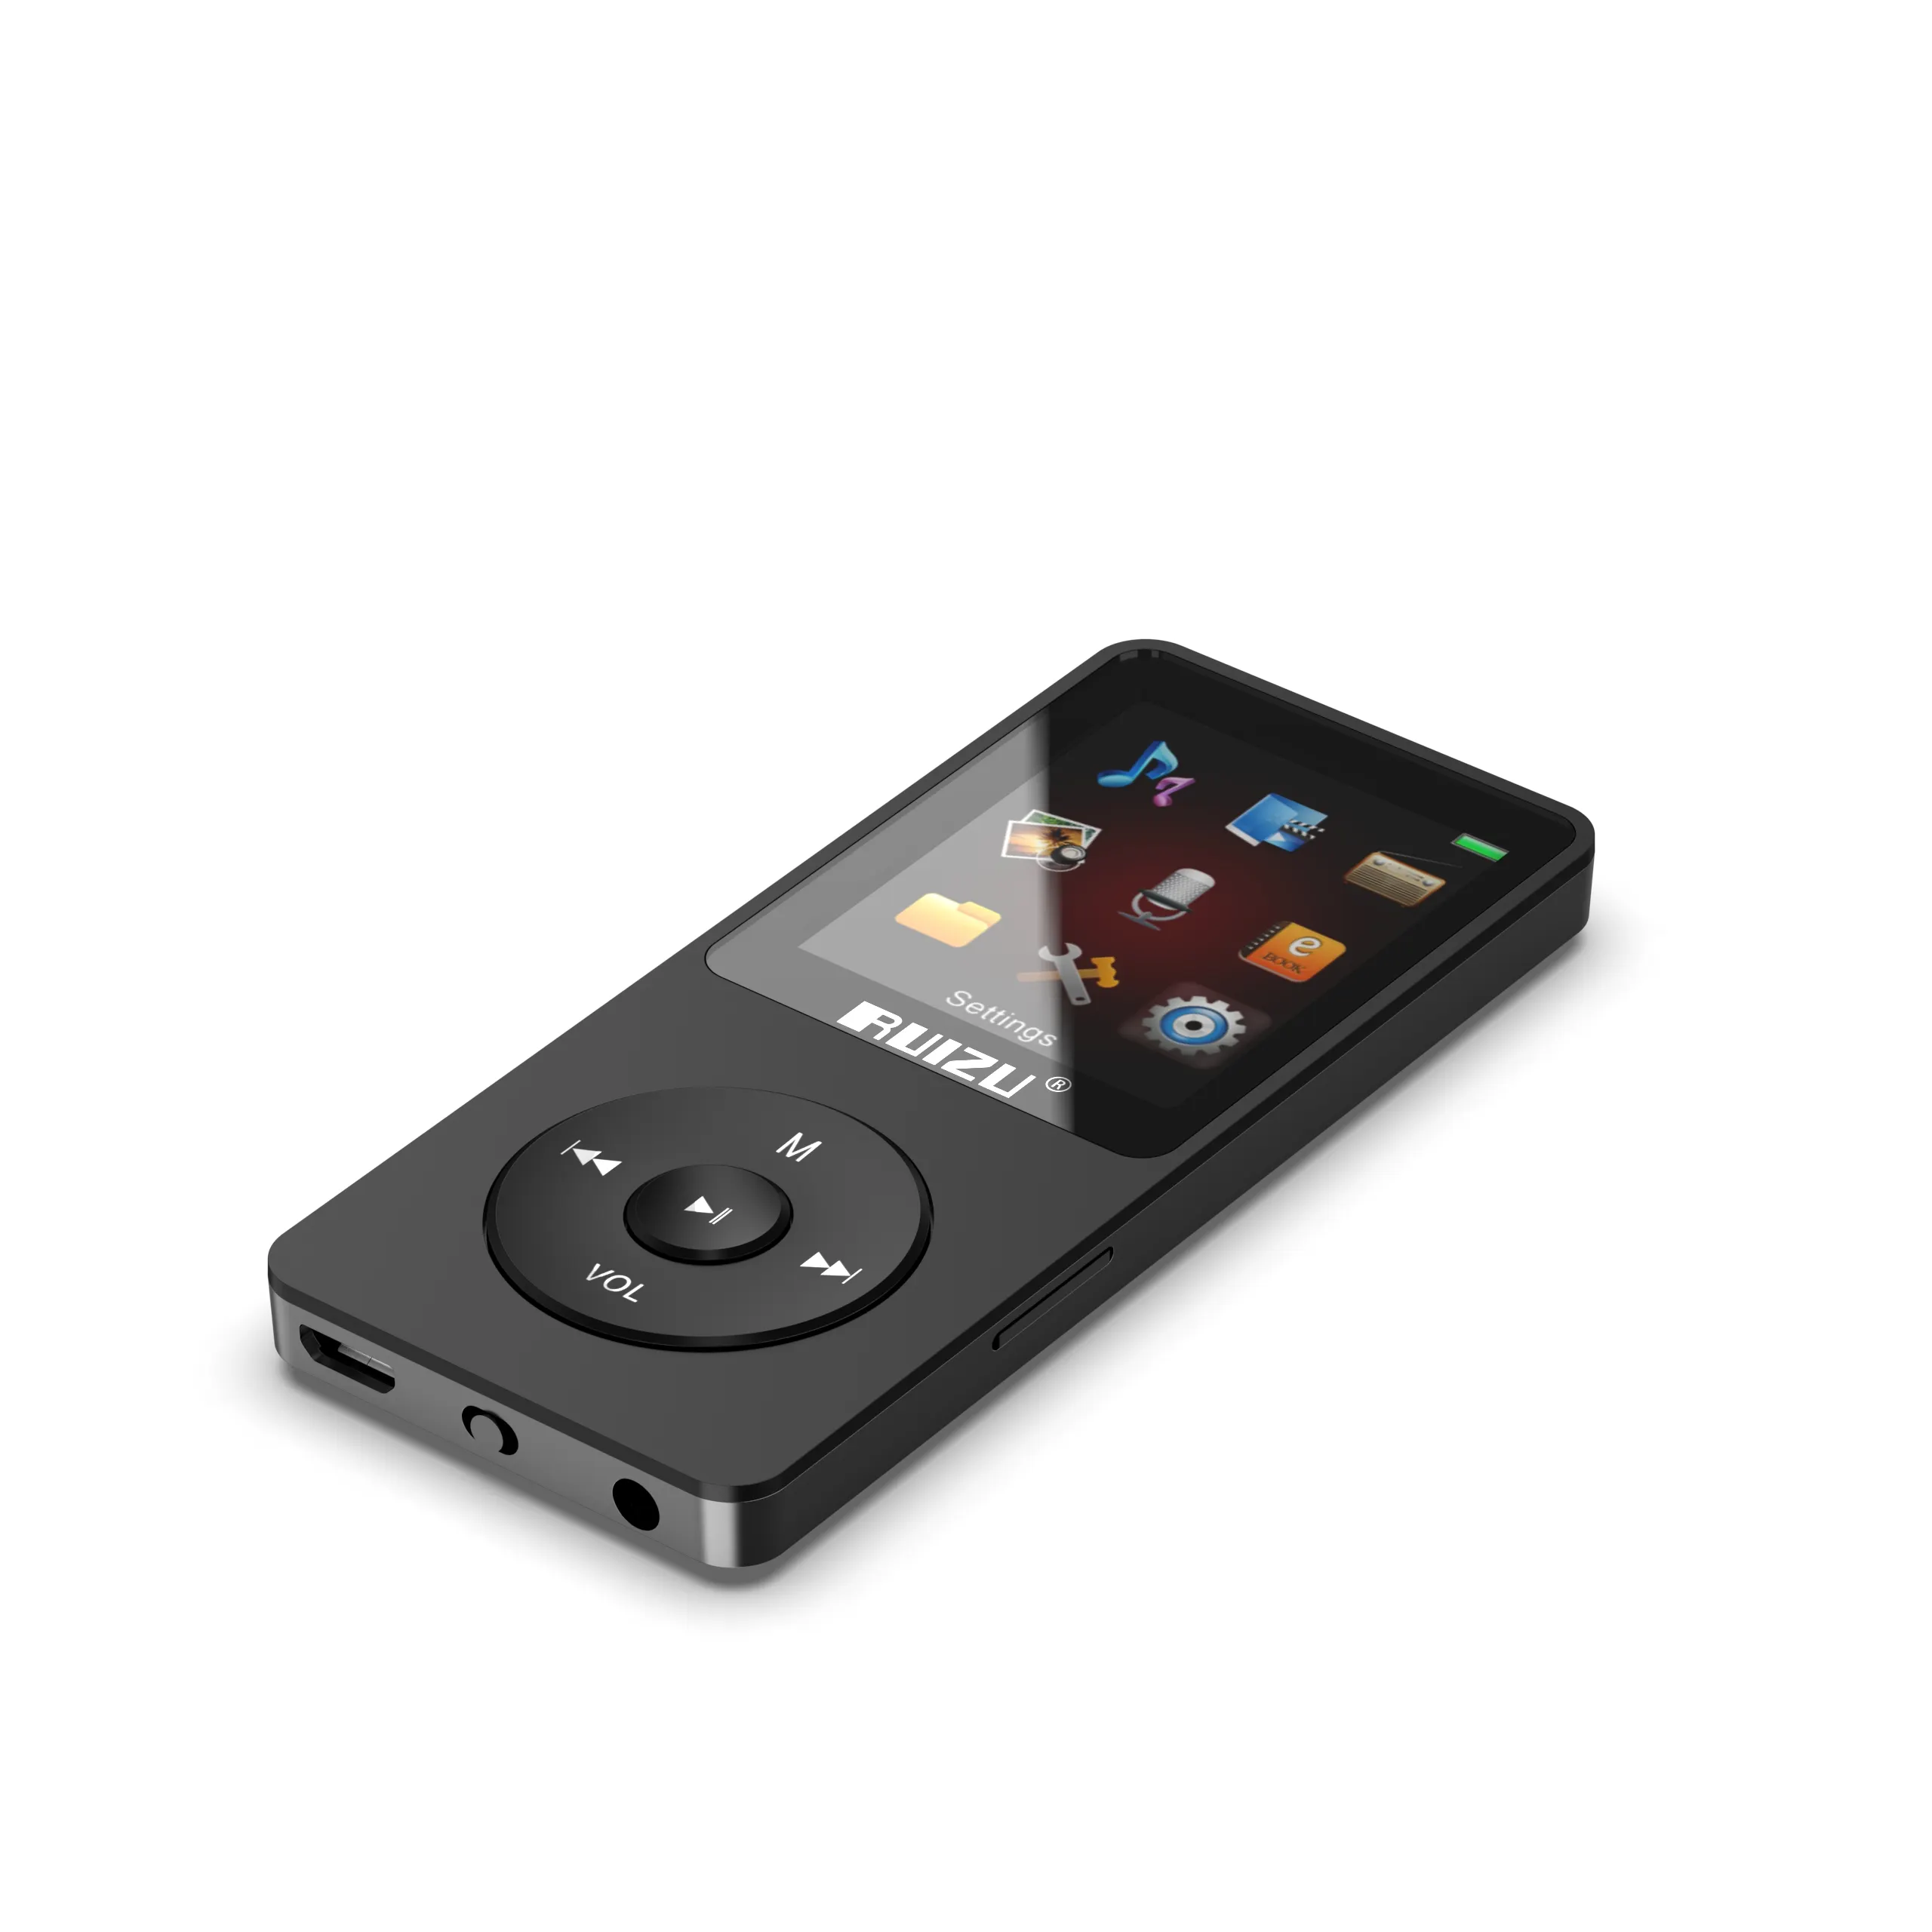 Latest Audio RUIZU X02 Bible Am/fm Bluetooth Fm Radio 1.8 Inch TFT Screen Portable Support Tf Card MP3 Music Player